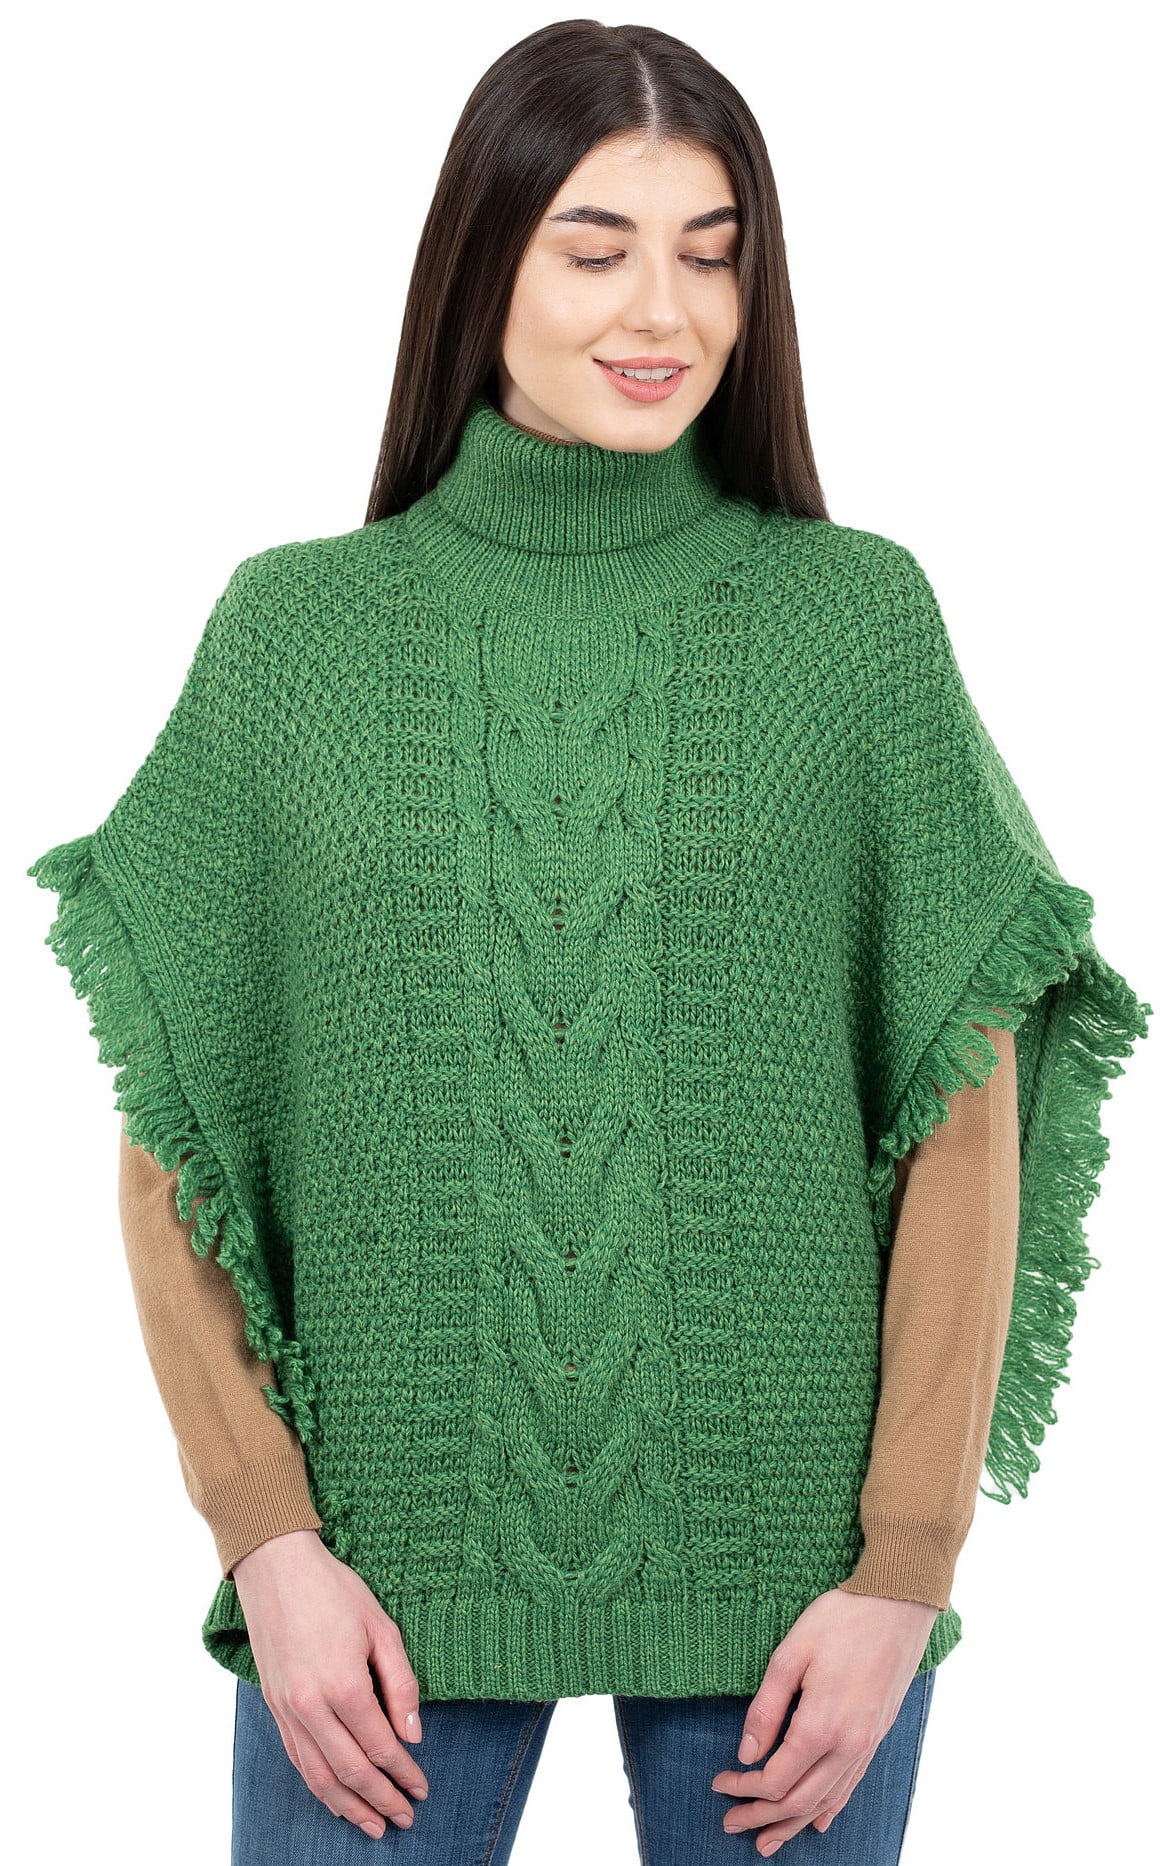 Tot Oneffenheden Gering SAOL 100% Merino Wool Women's Aran Cable Knitted Poncho Irish Cape High  Neck Sweater Made in Ireland - Walmart.com